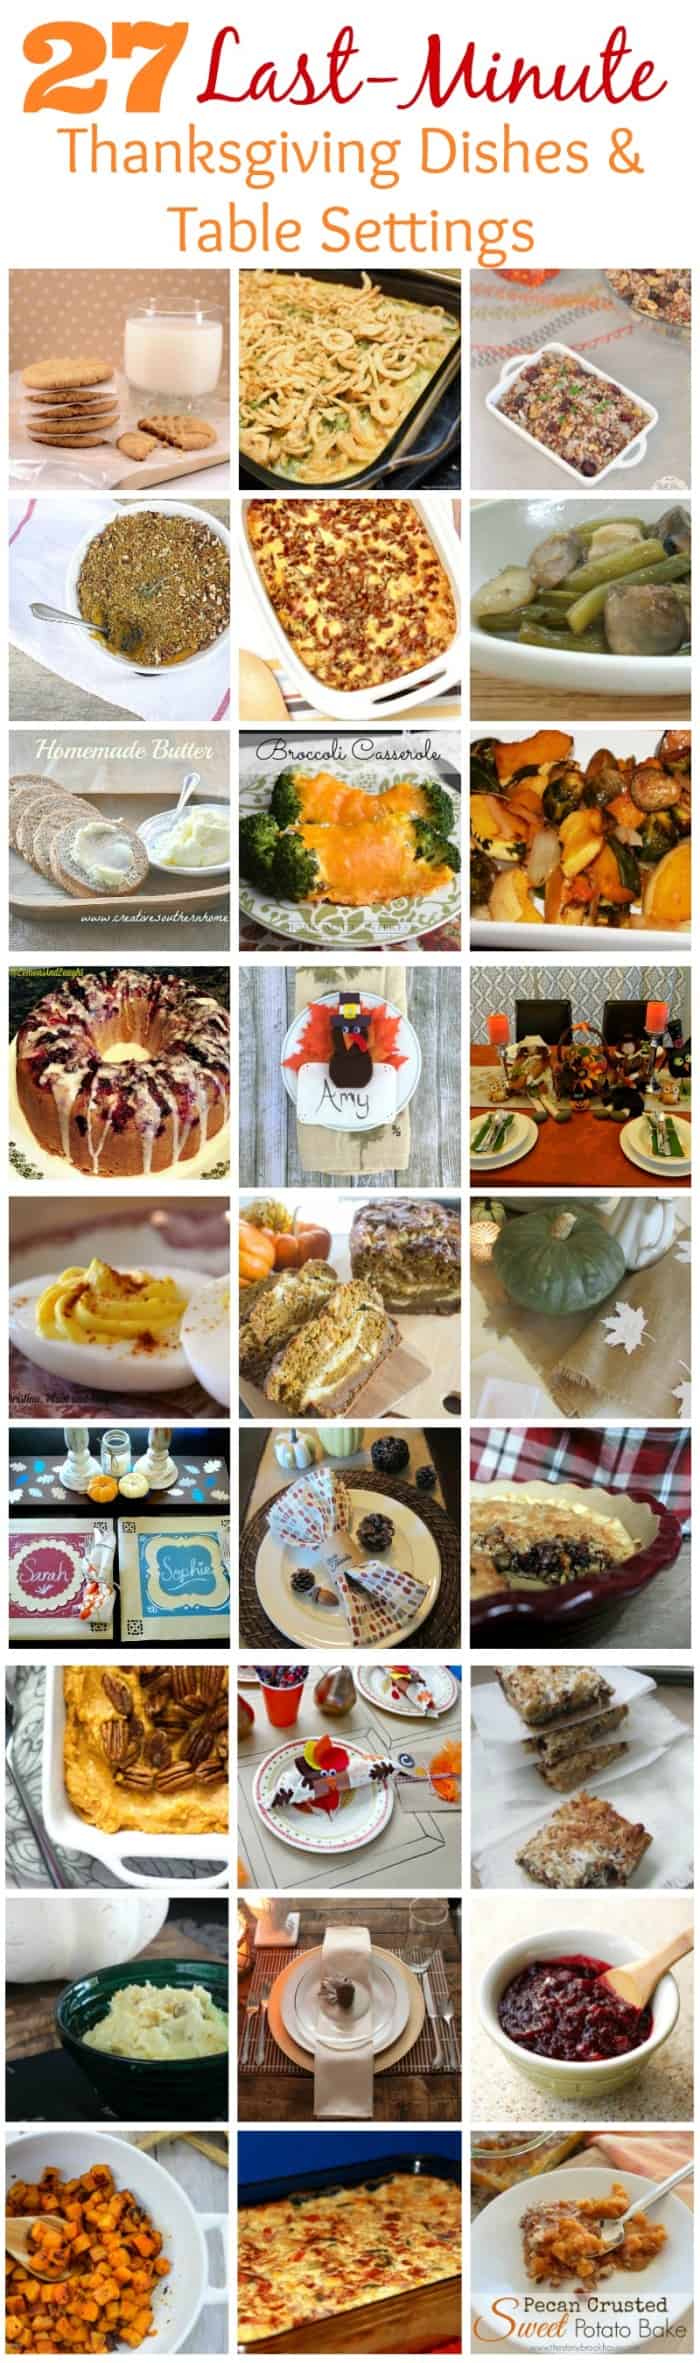 Thanksgiving Blog Hop Collage